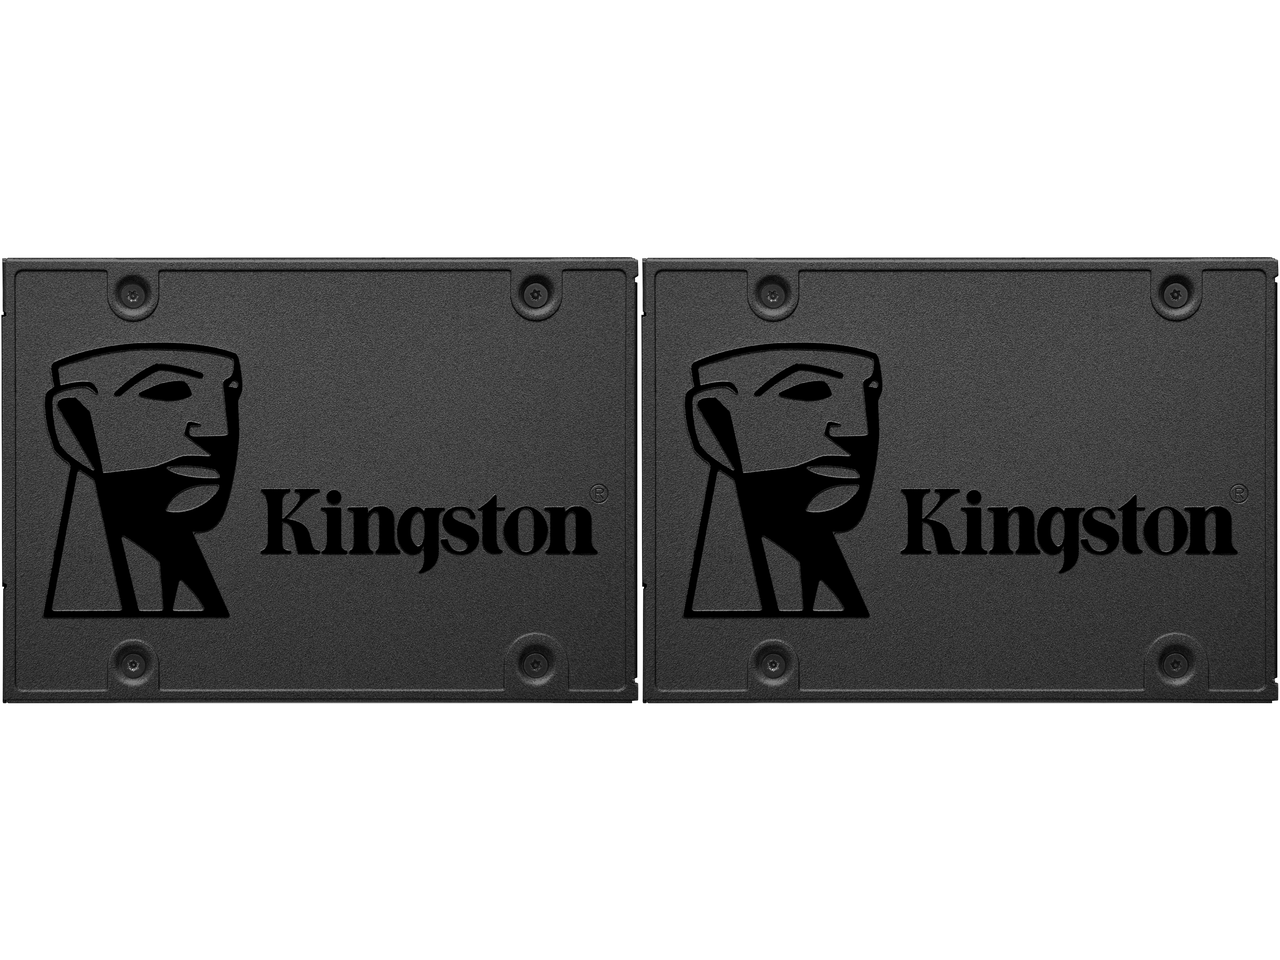 2 x Kingston A400 240GB SATA 3 2.5" Internal SSD $31 + Free Shipping